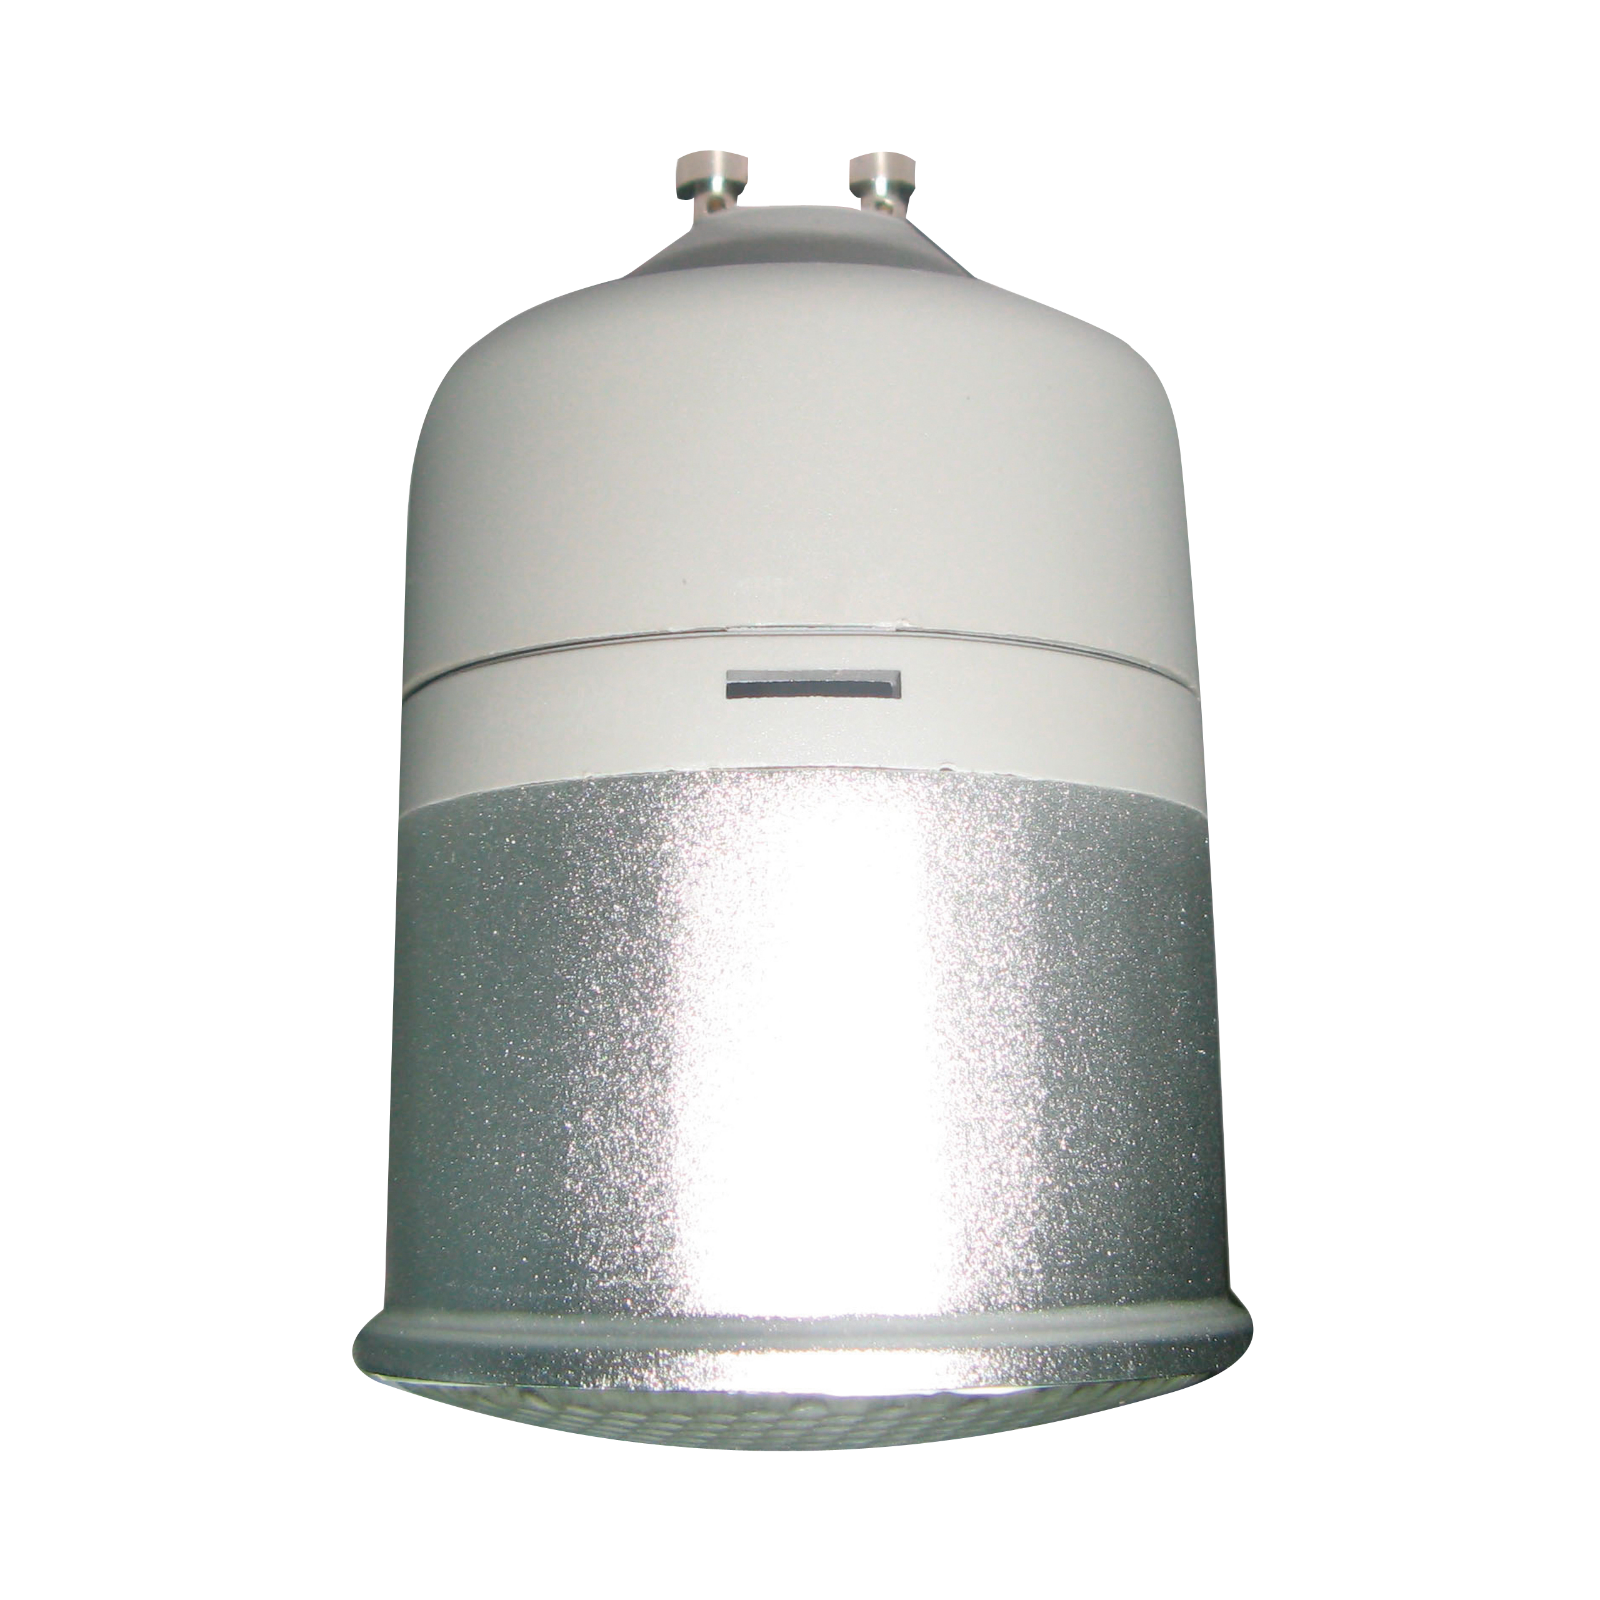 230V 13W GU10 Compact Fluorescent Lamp Warm White 2700K - GU1013W 